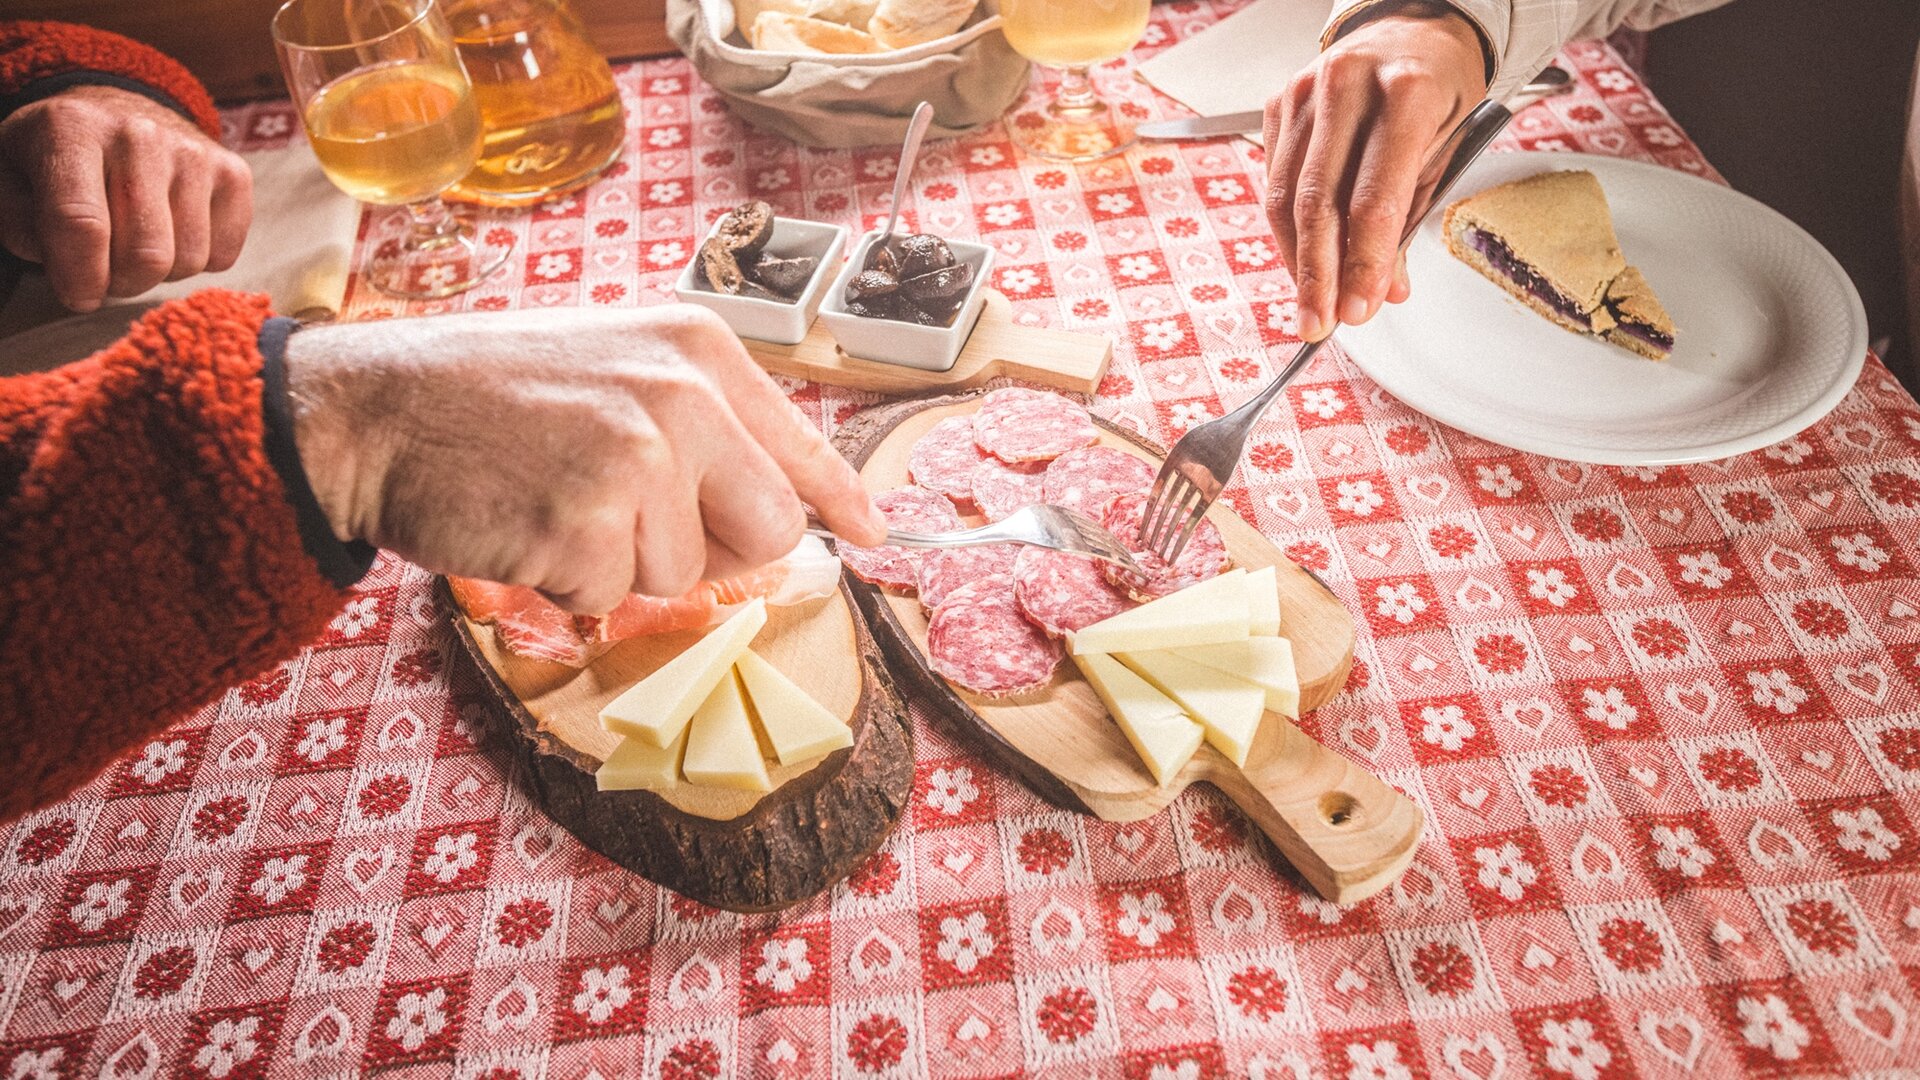 Cold cuts and cheese snack Comano - Lake Garda